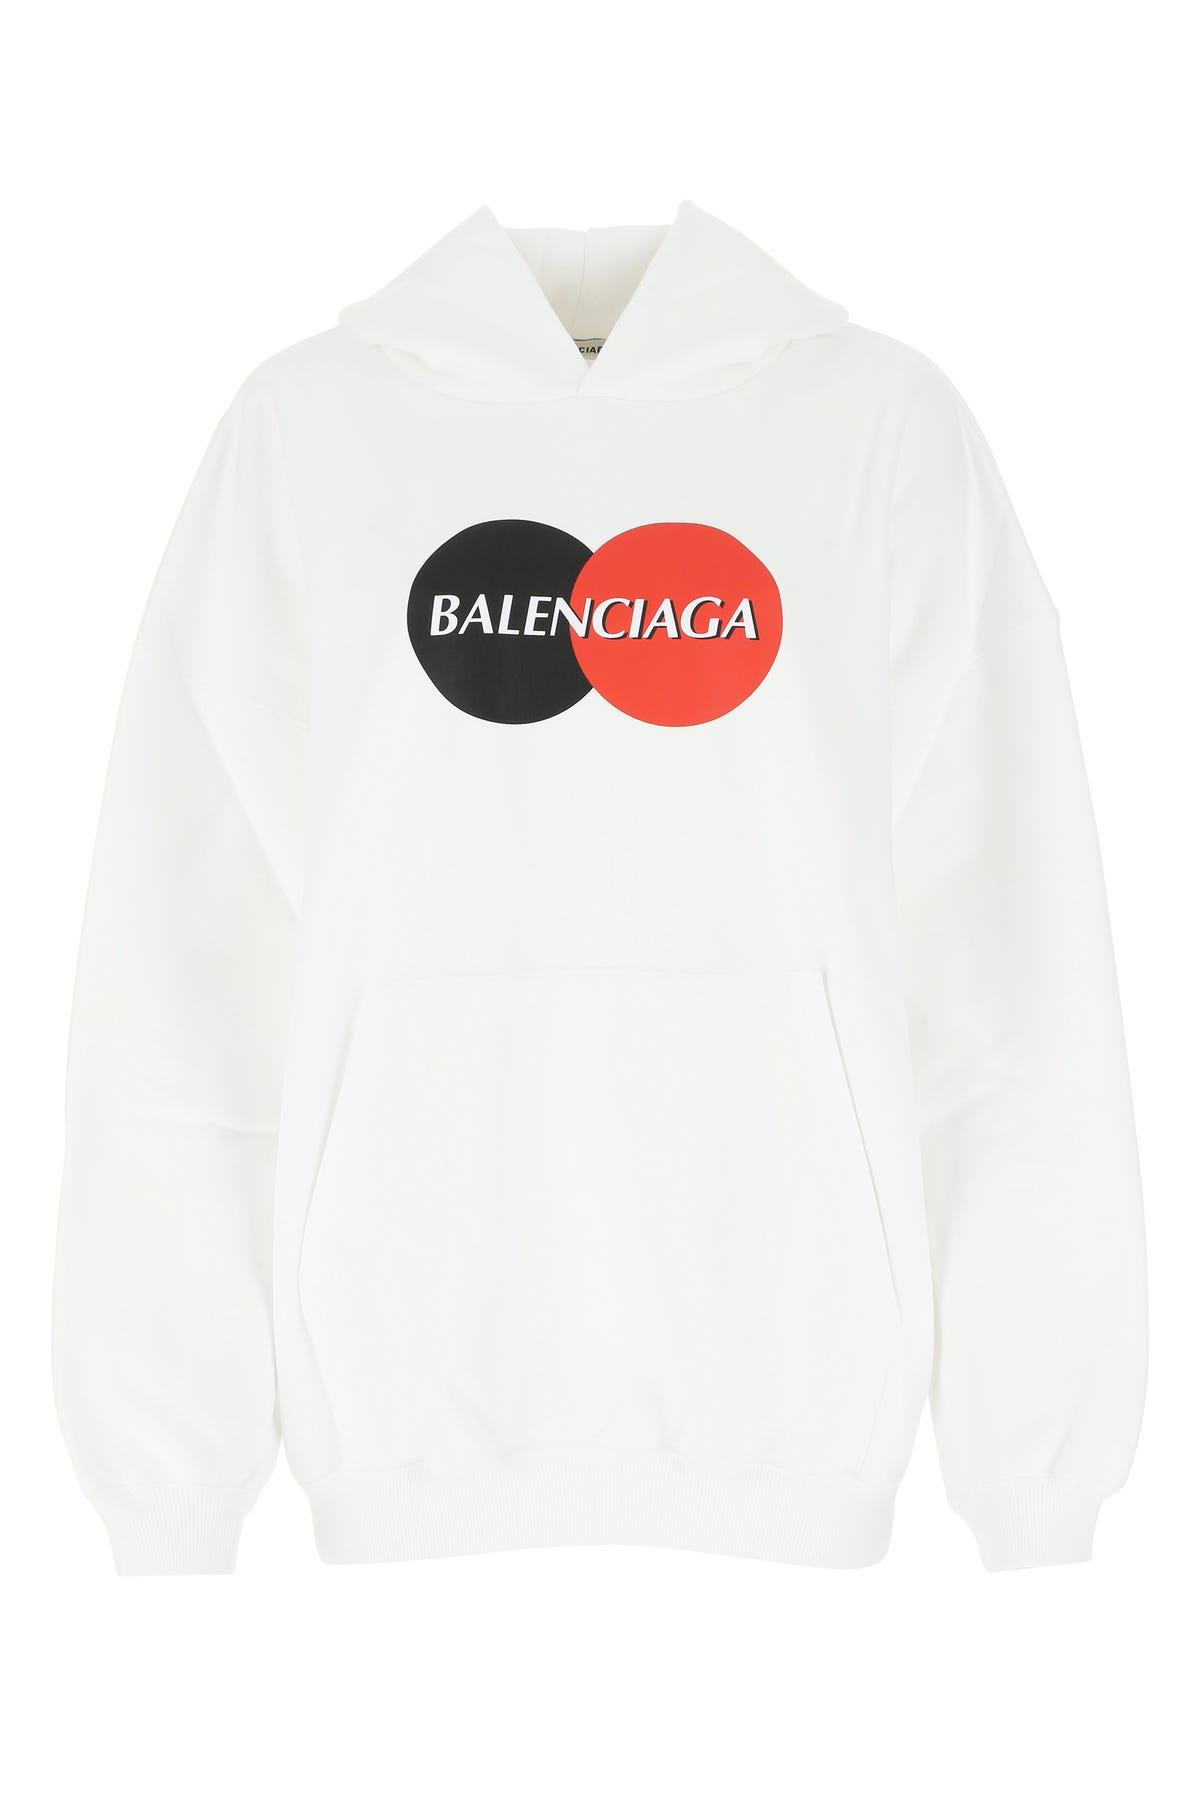 Balenciaga White Cotton Oversize Sweatshirt | Lyst